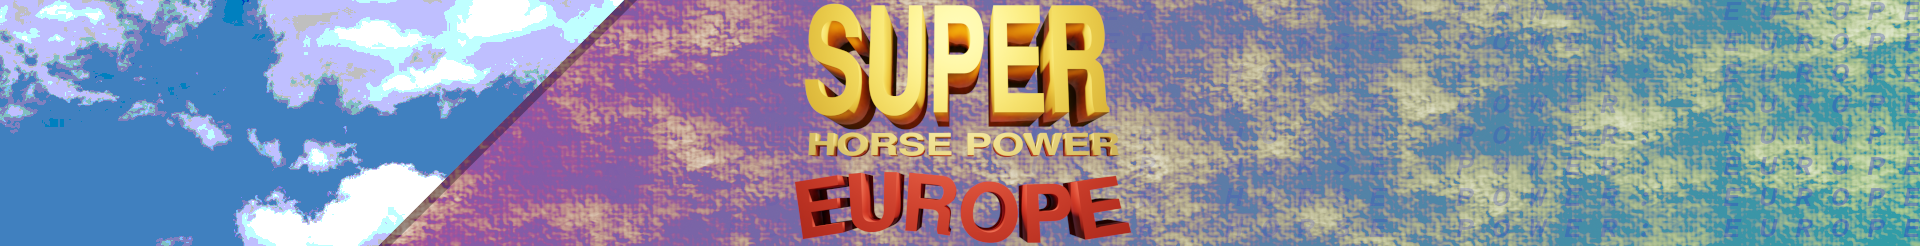 Super Horse Power Europe